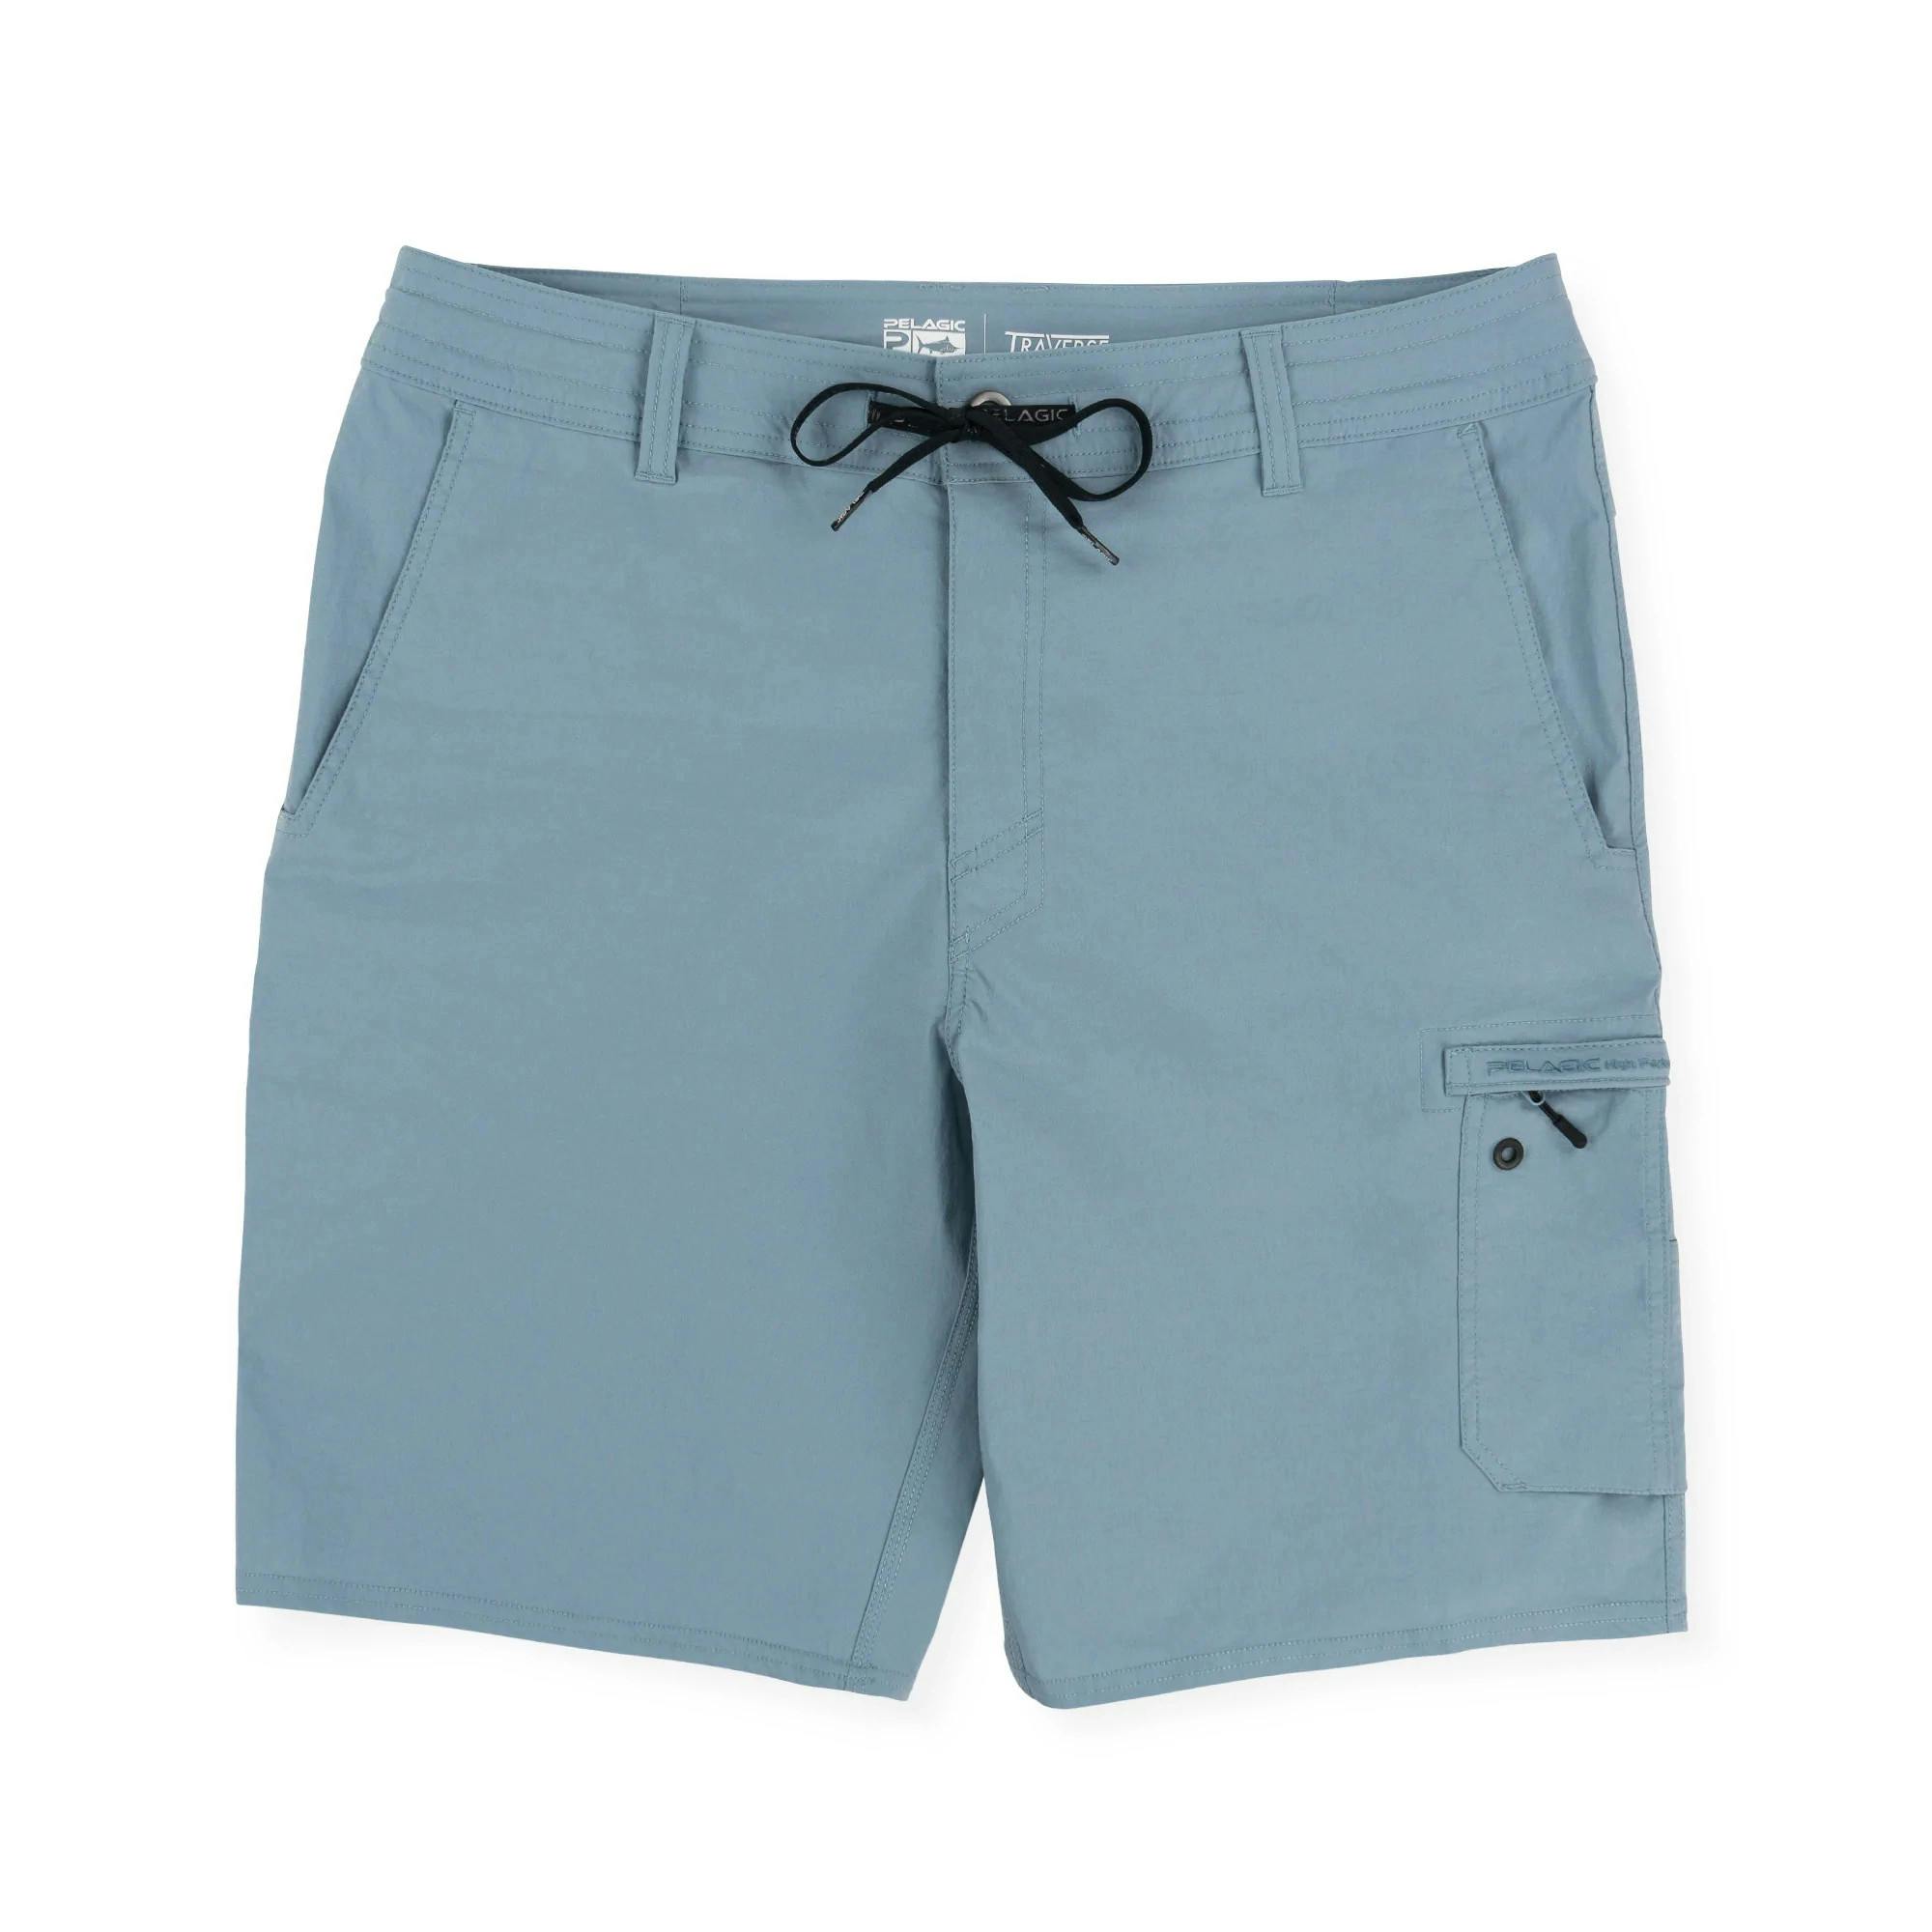 Pelagic Traverse Hybrid Shorts (Men's) - Slate